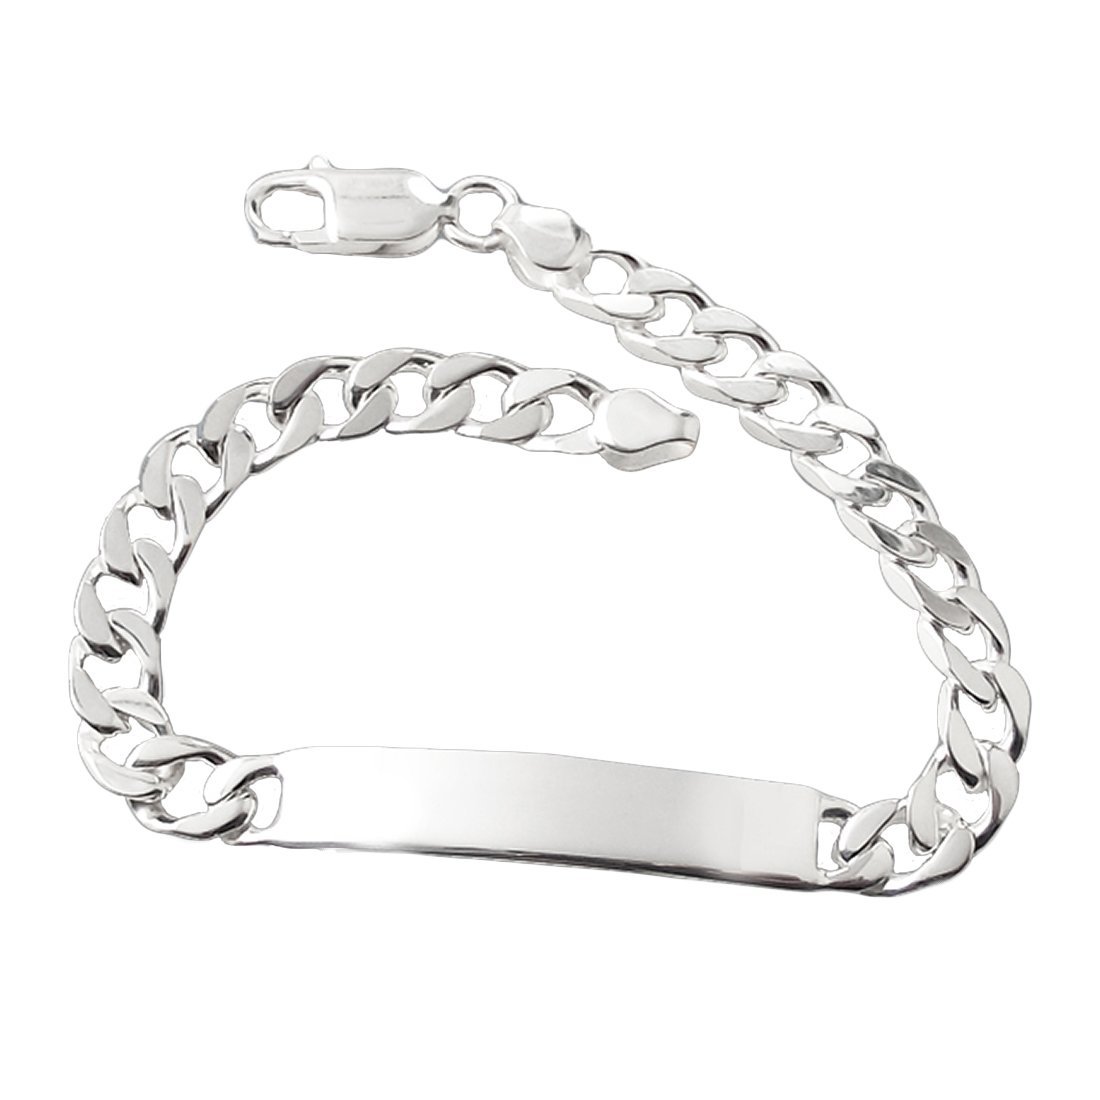 Details more than 85 bracelet images silver latest - in.duhocakina